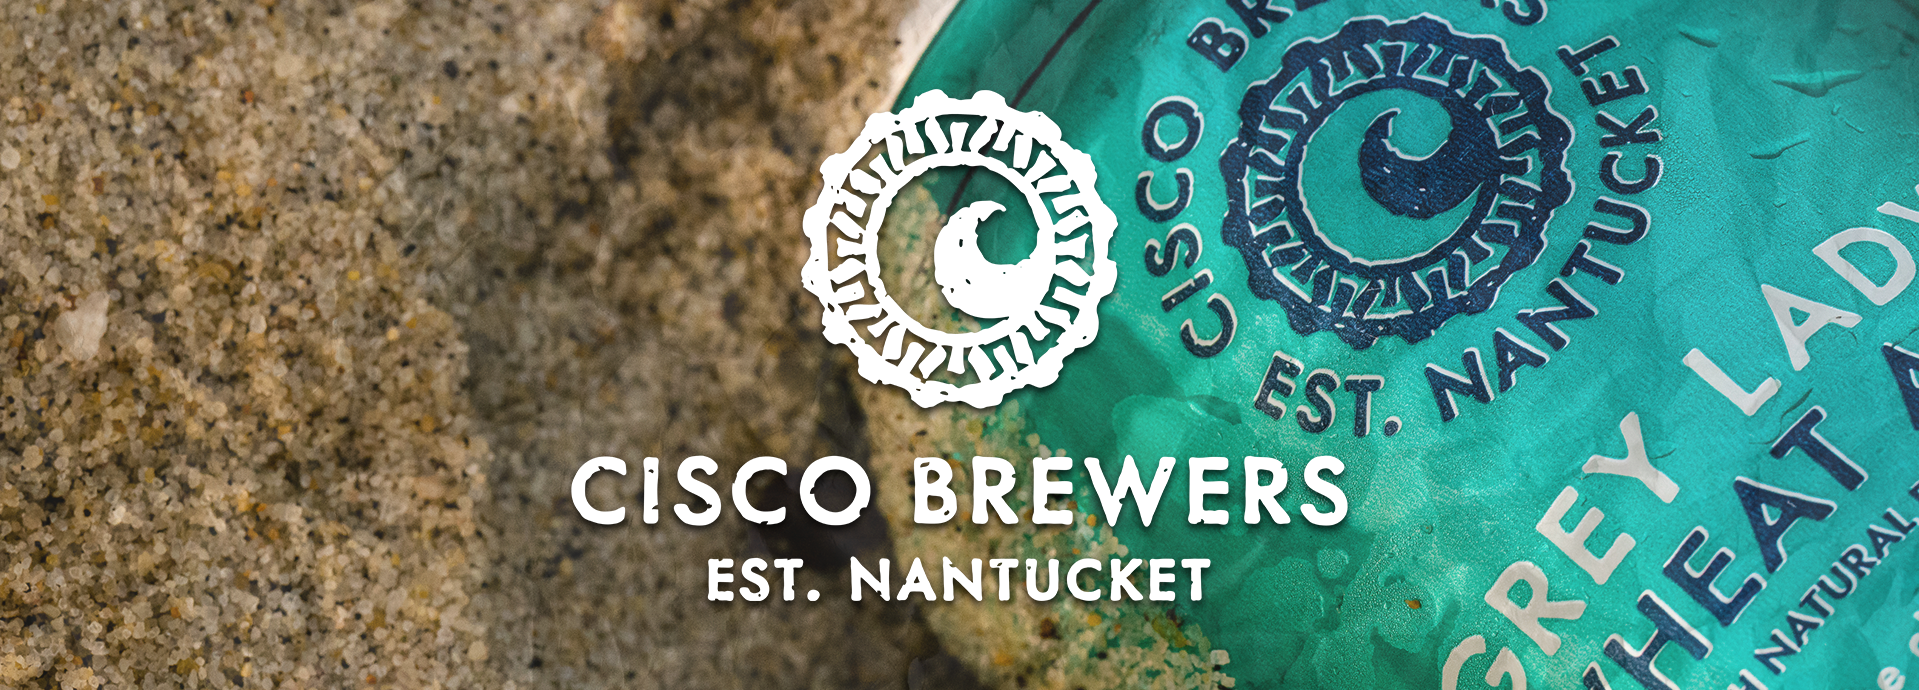 Cisco Brewers Banner 